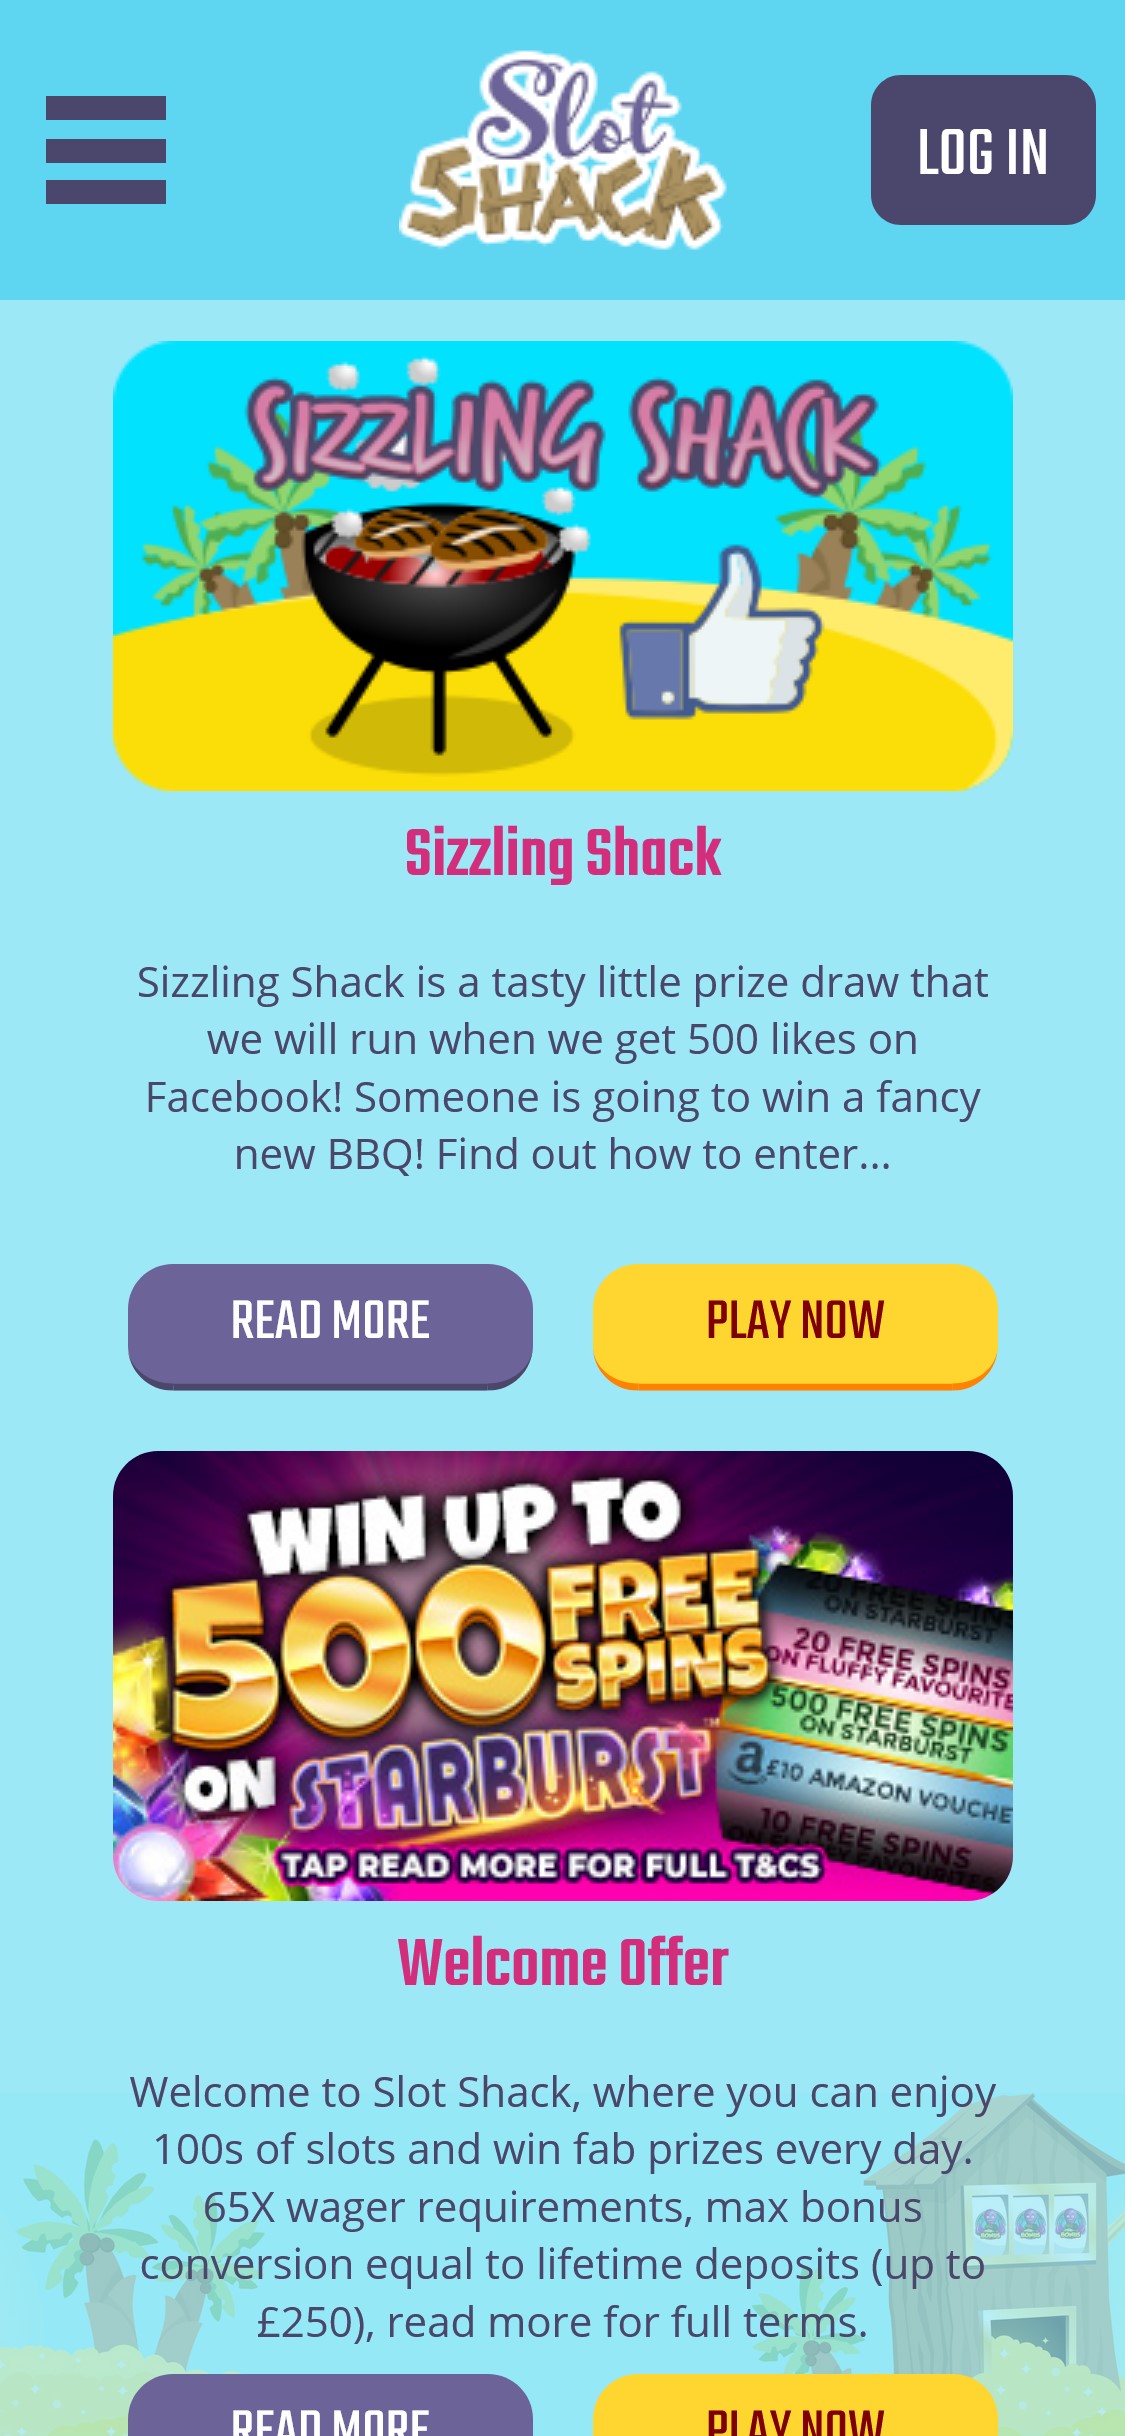 Slot Shack Casino Mobile No Deposit Bonus Review